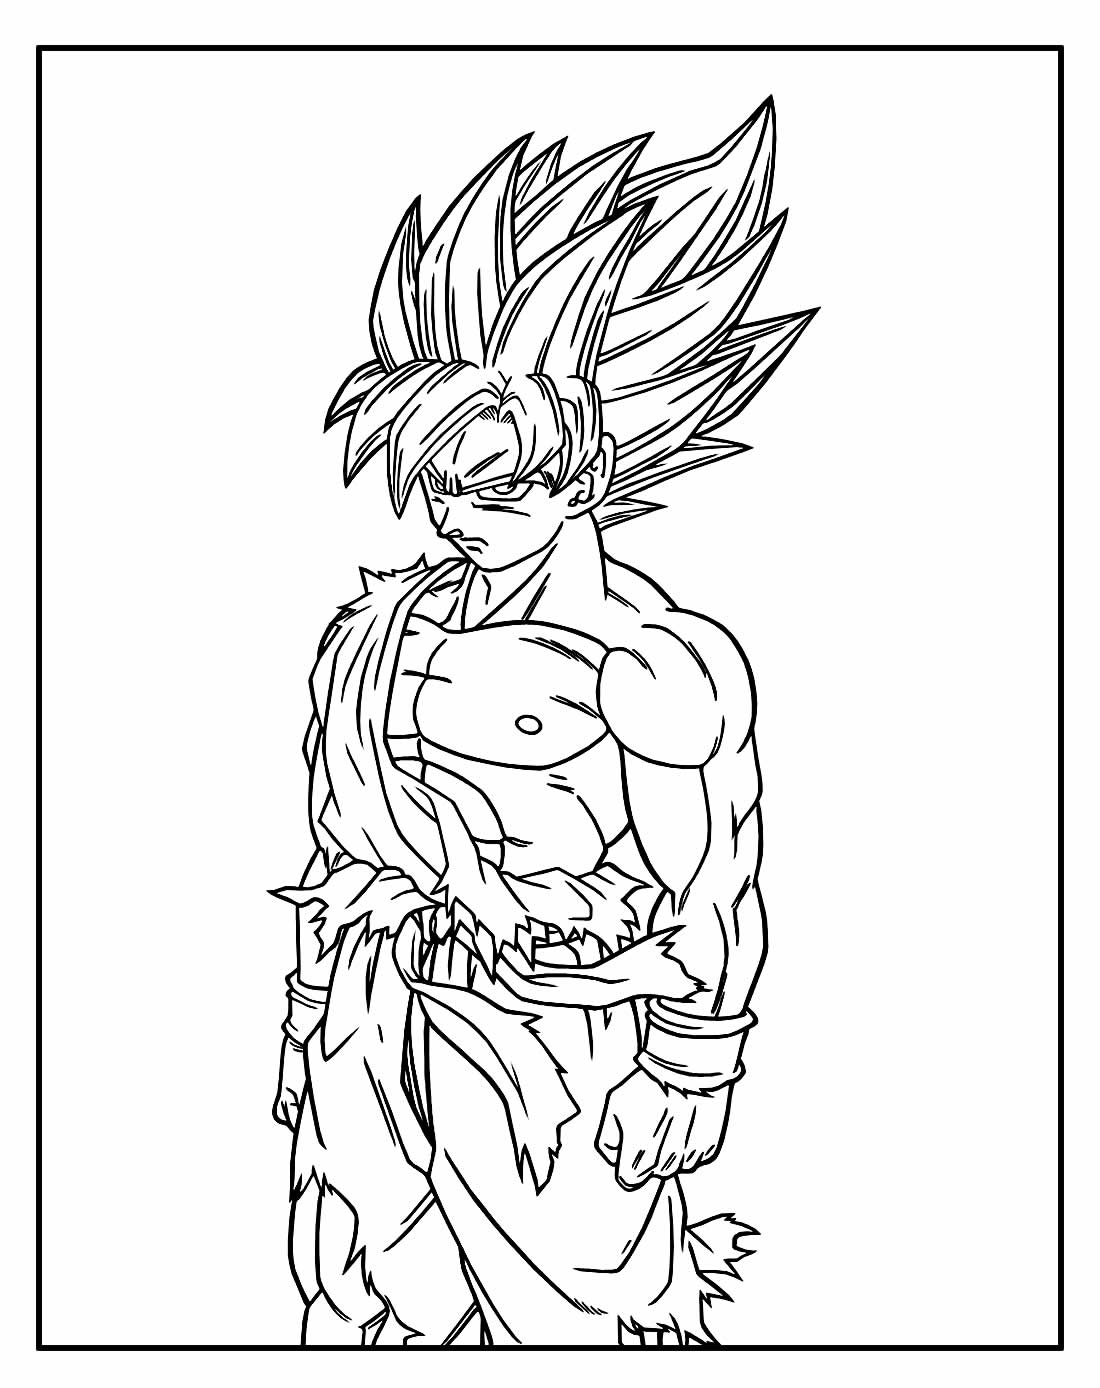 Página para colorir do Goku